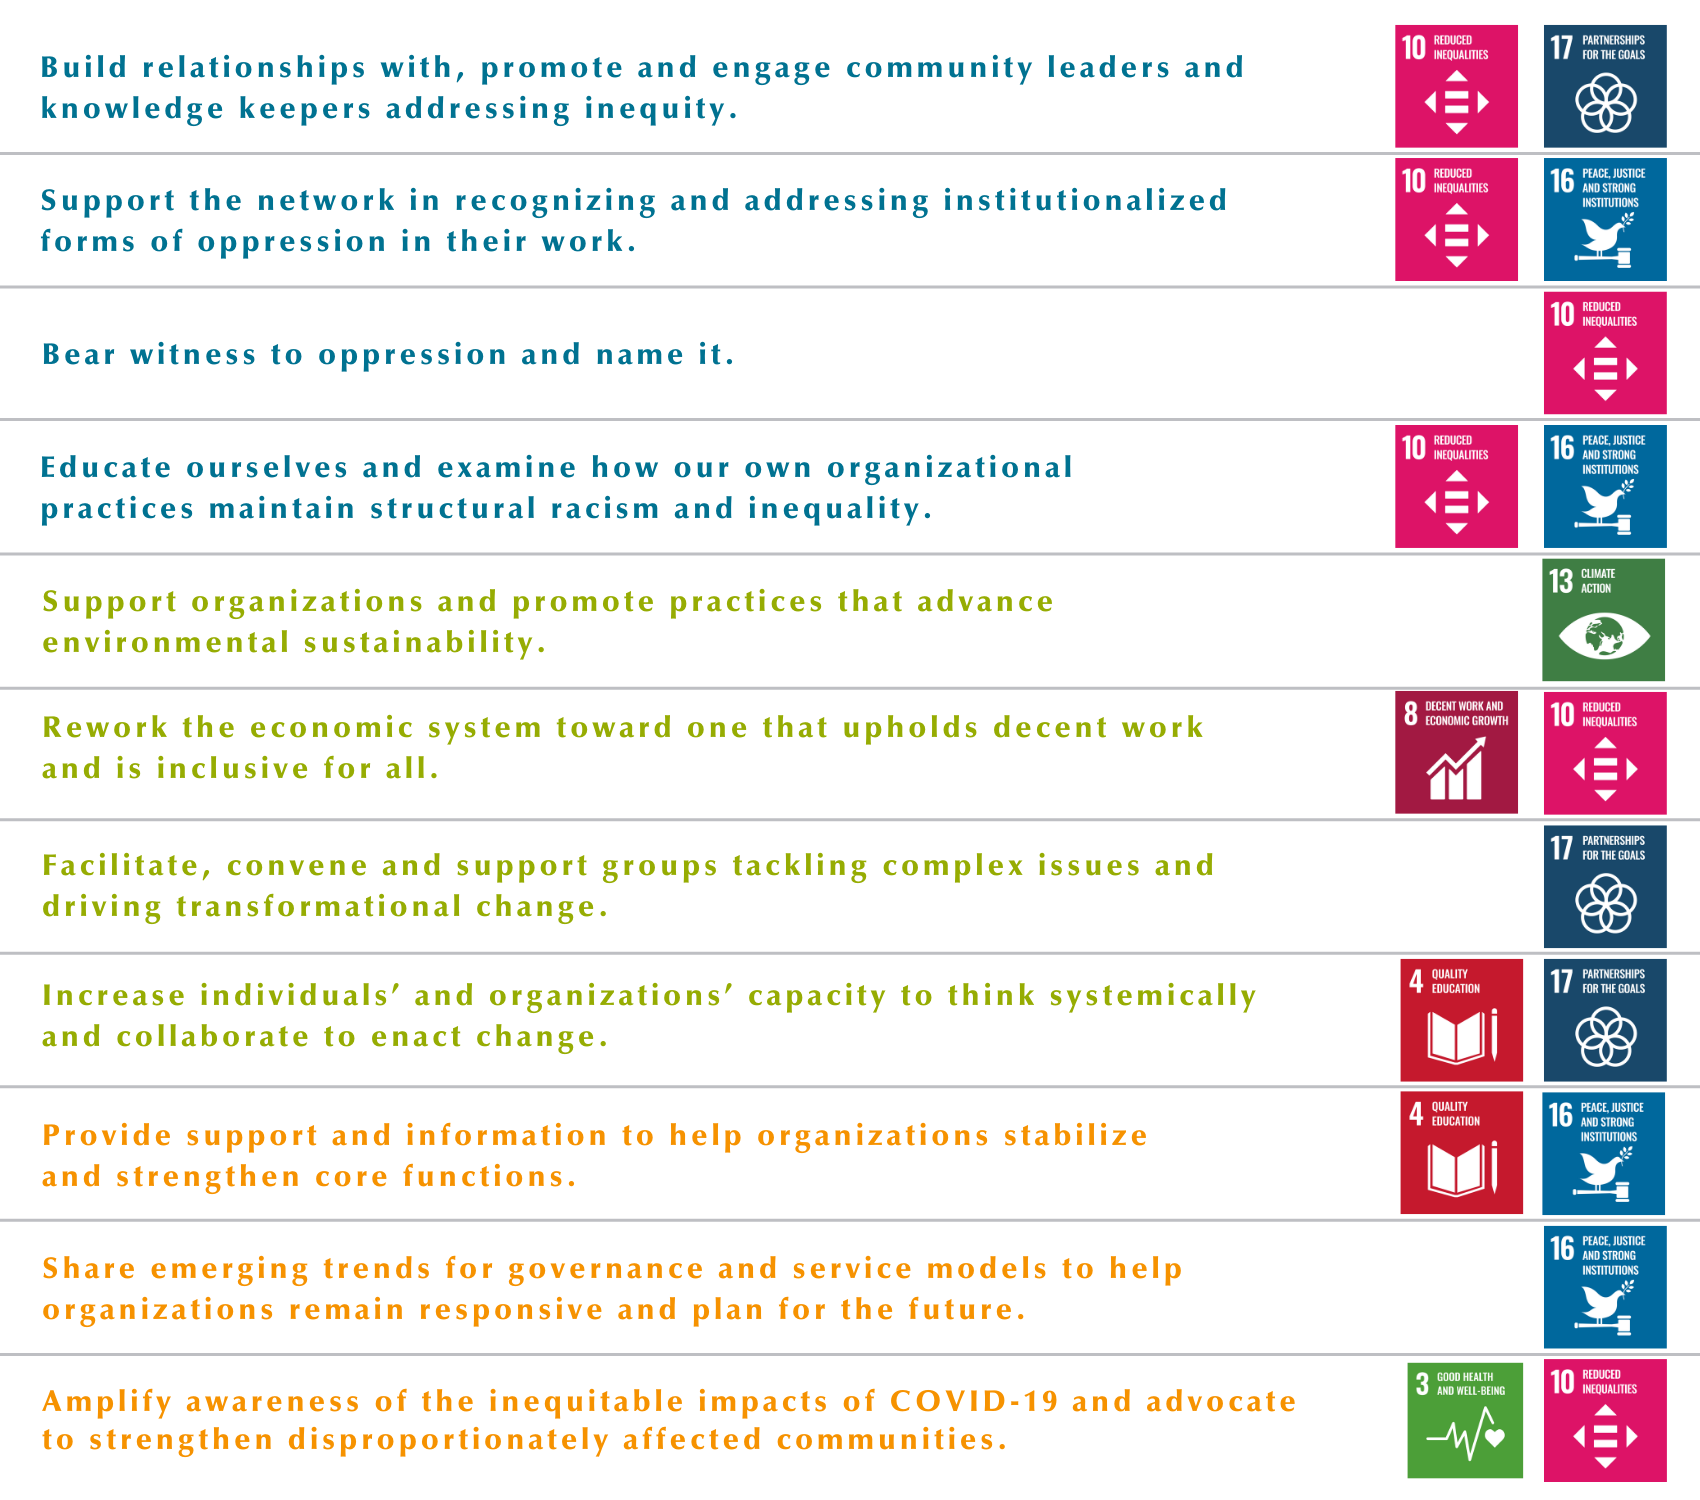 Image shows Pillar's strategic priorities and their corresponding SDGs